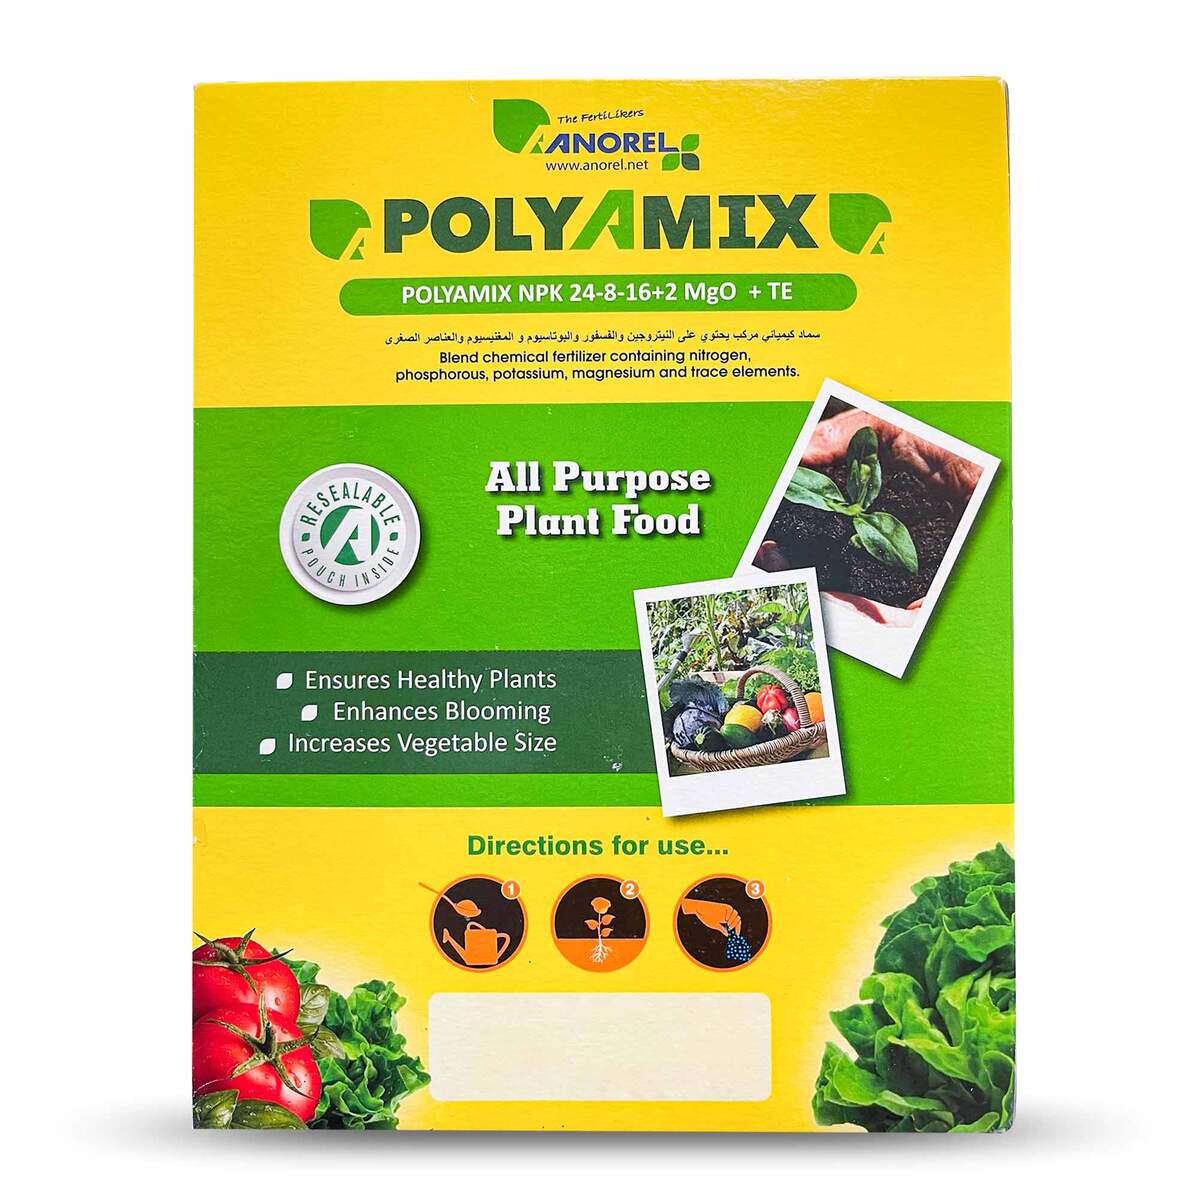 Polyamix NPK 24-8-16+2 MgO +TE All Purpose Plant Food 1000g